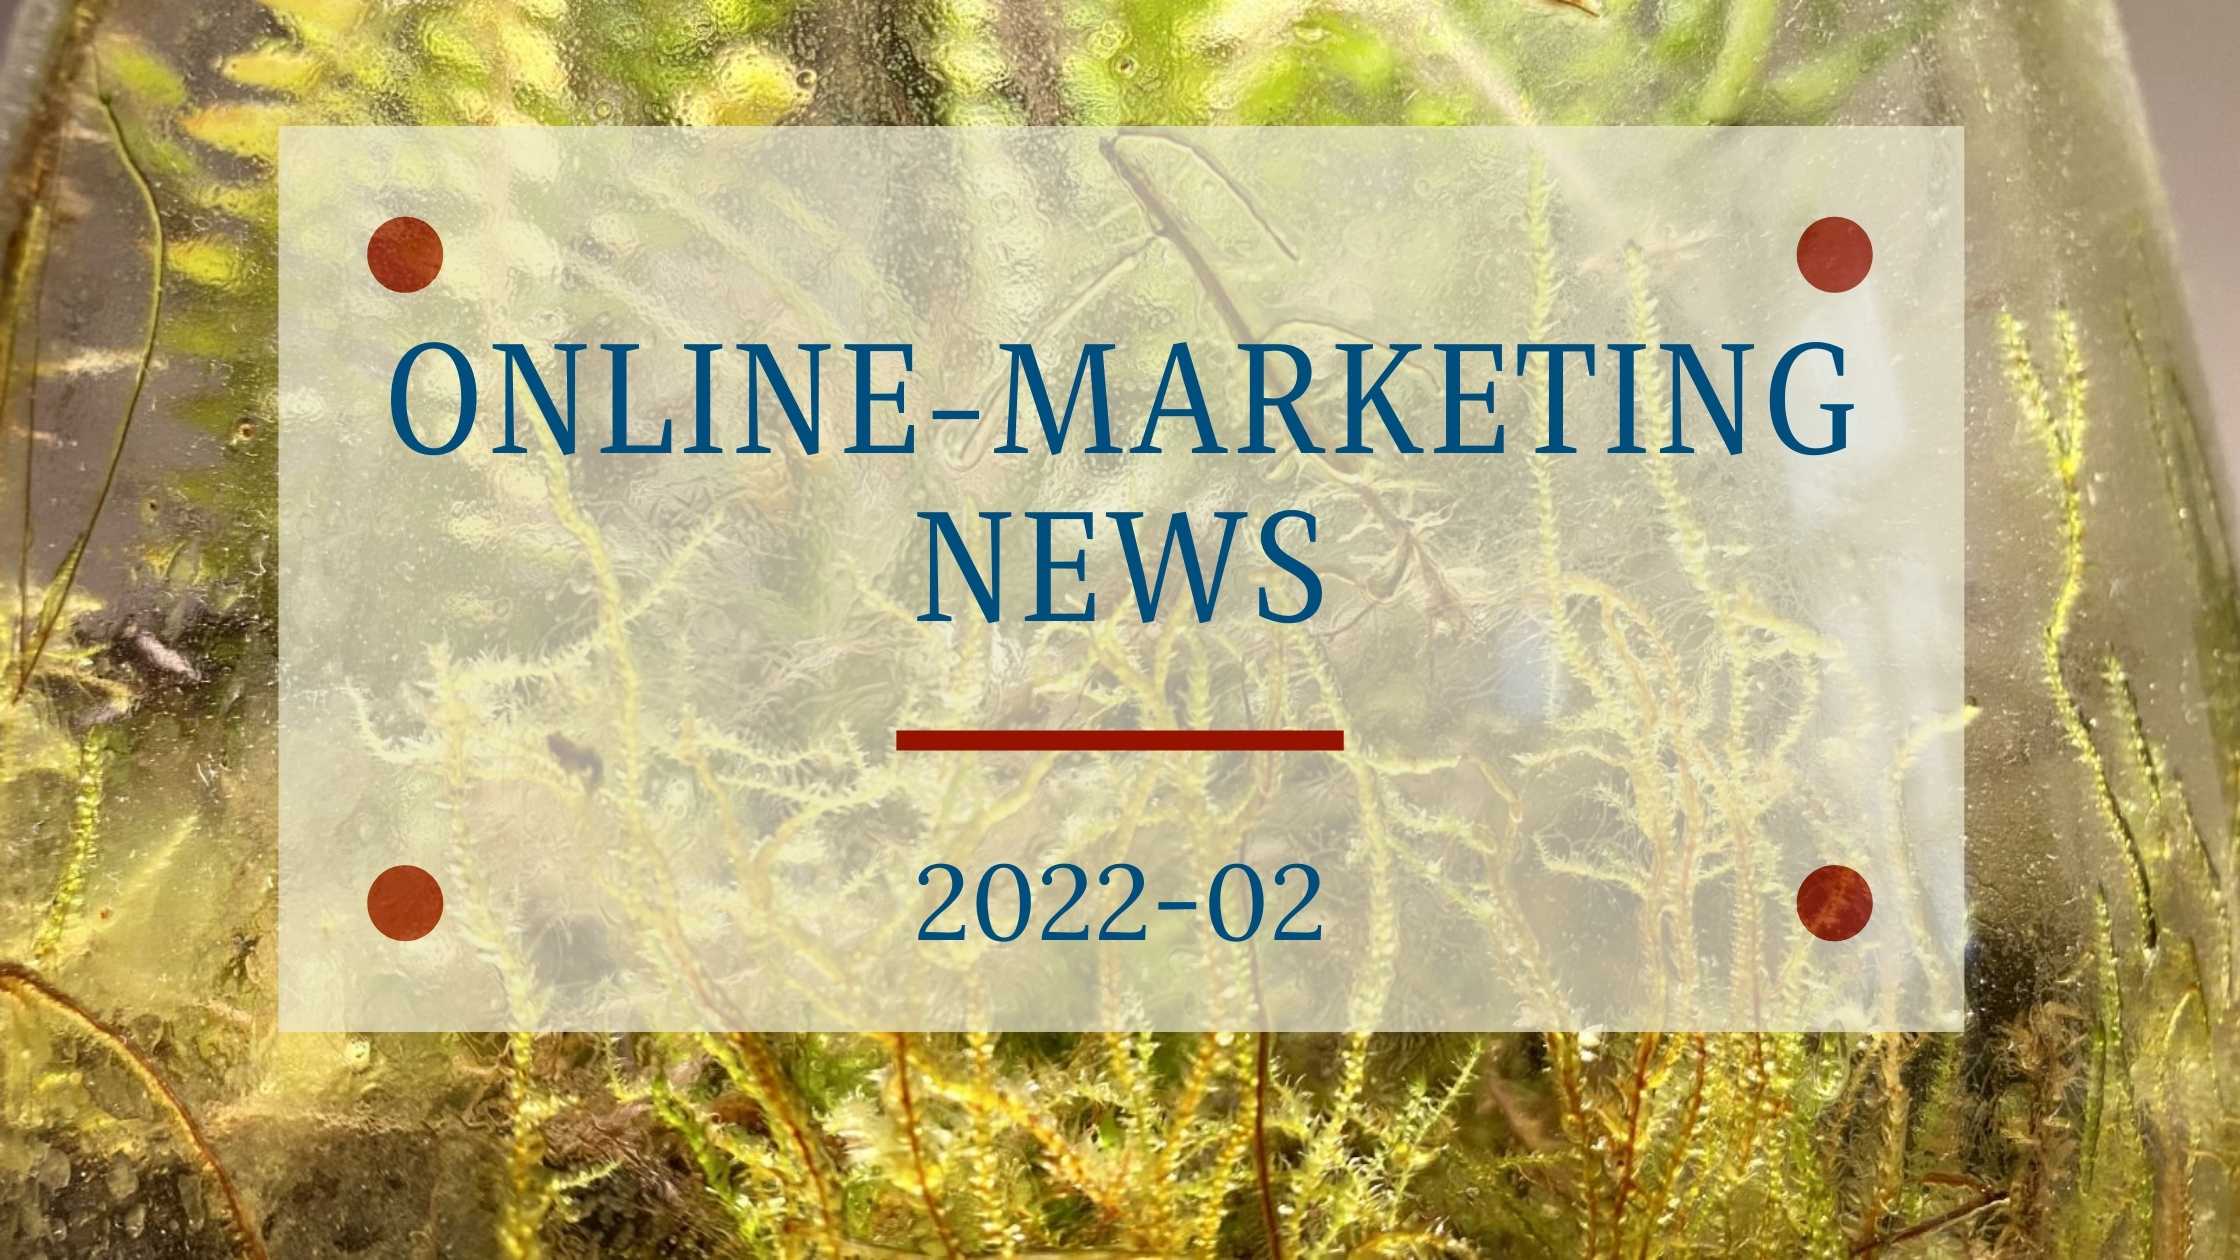 Online-Marketing News 2022-02